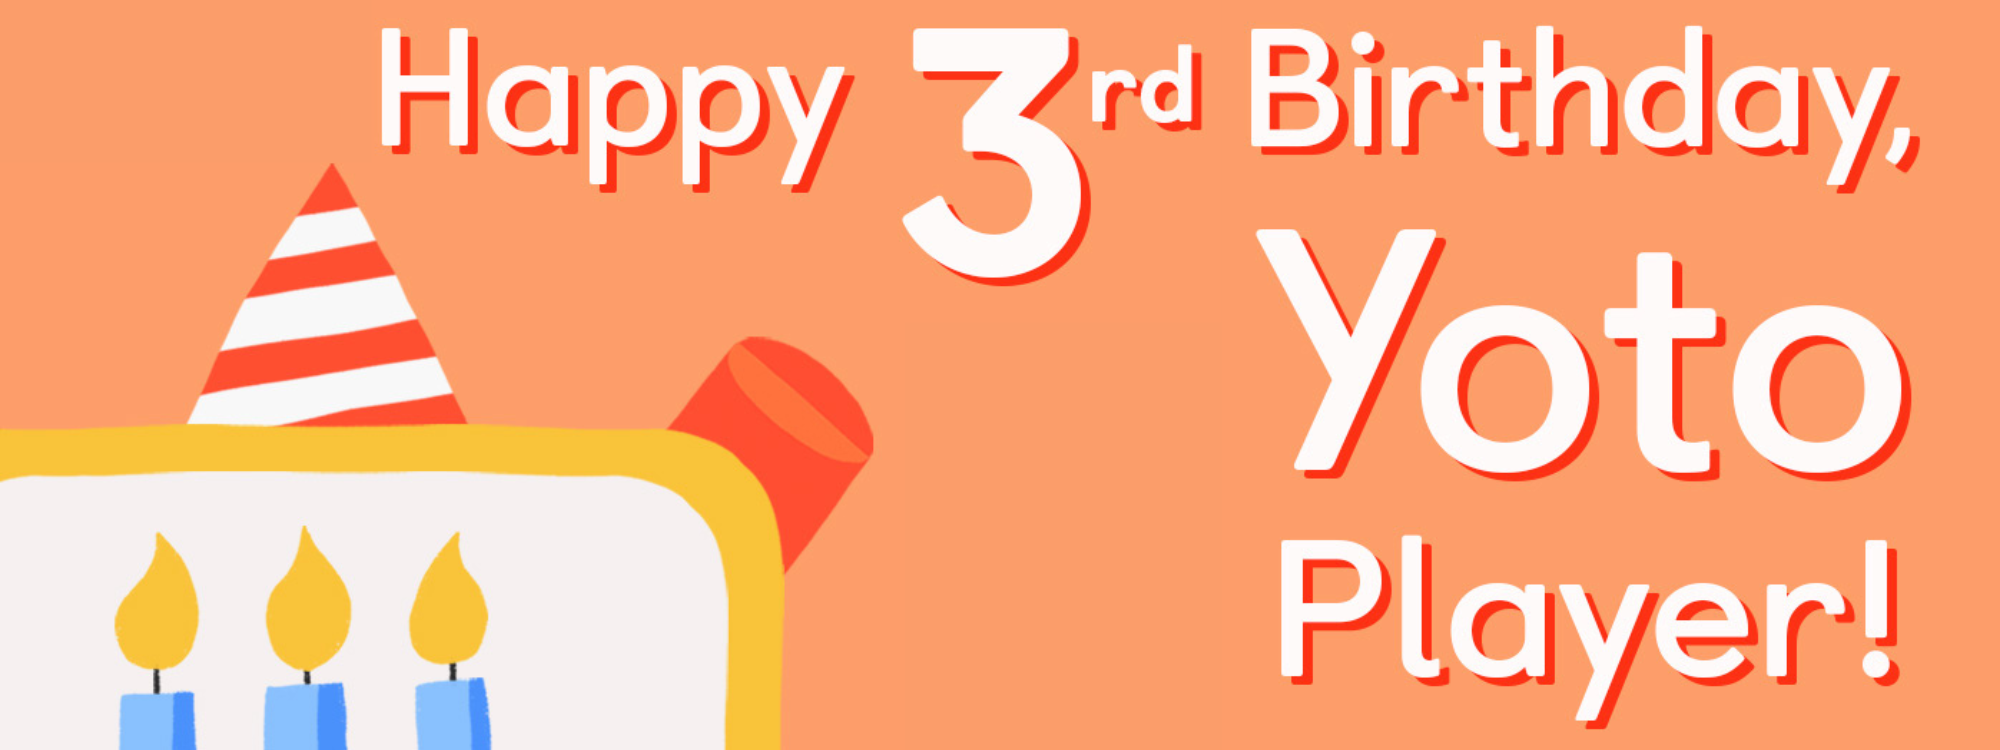 Happy 3rd birthday, Yoto Player!